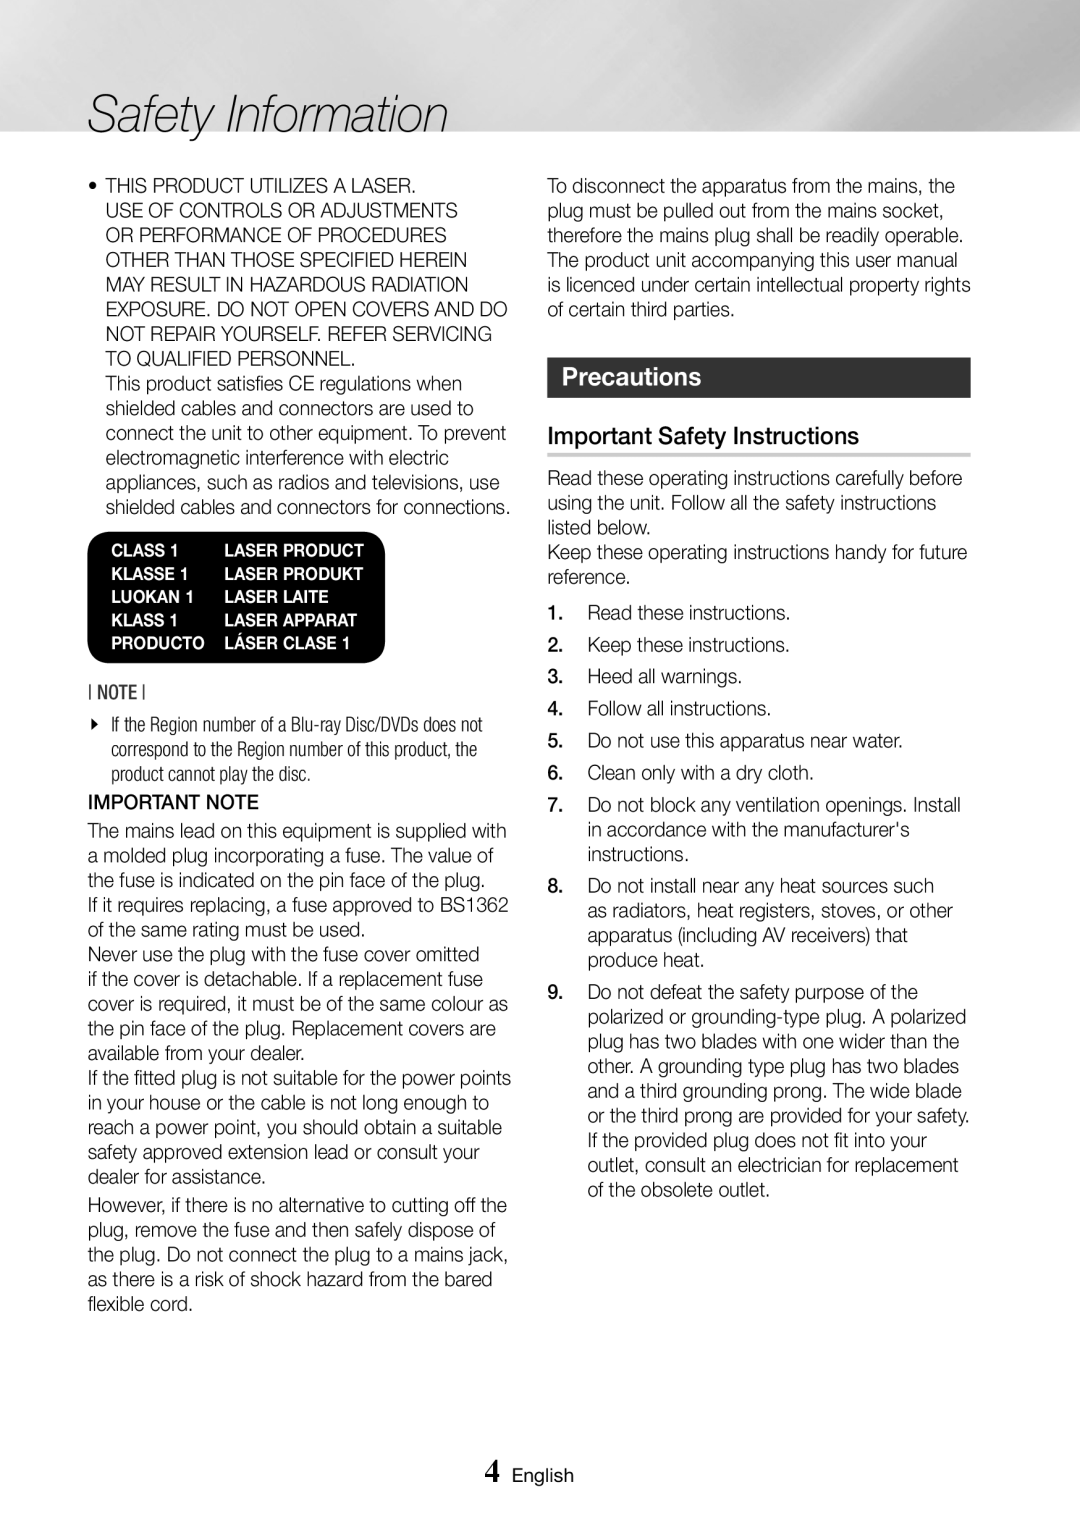 Samsung BD-J7500/EN, BD-J7500/ZF manual Precautions, Important Safety Instructions, Safety Information 